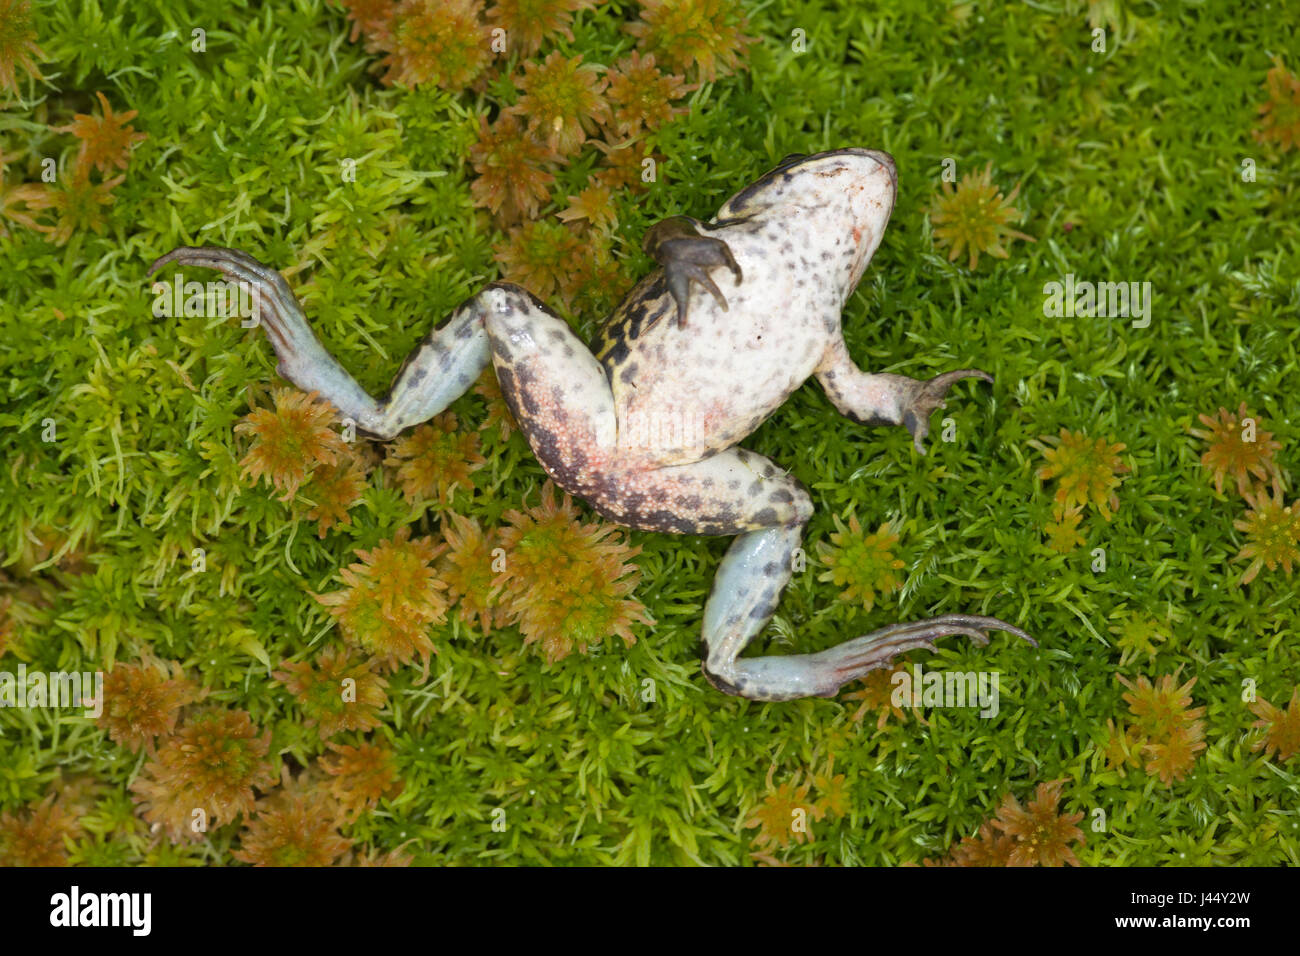 Foto van Een Kikker sterben Gestorven ist Aan Het Ranavirus En de Typische Dijen Heeft Ritt; Foto von einem Frosch, der von der roten Bein Krankheit gestorben ist; Stockfoto